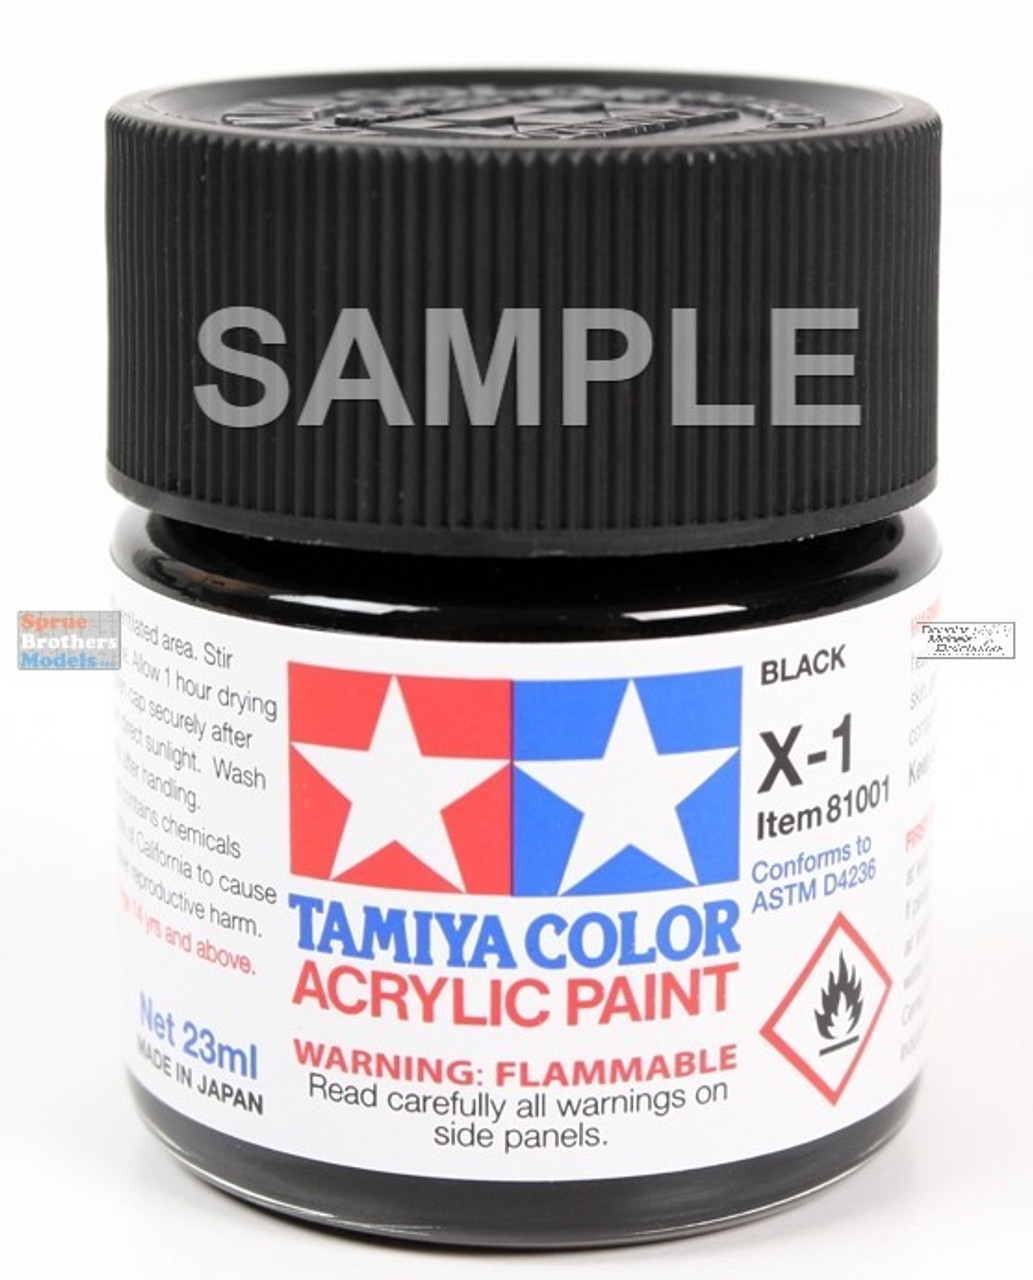 Tamiya Paint Tamiya Paint TAM81027 0.75 oz Tamiya Acrylic Paint - Clear Red  TAM81027